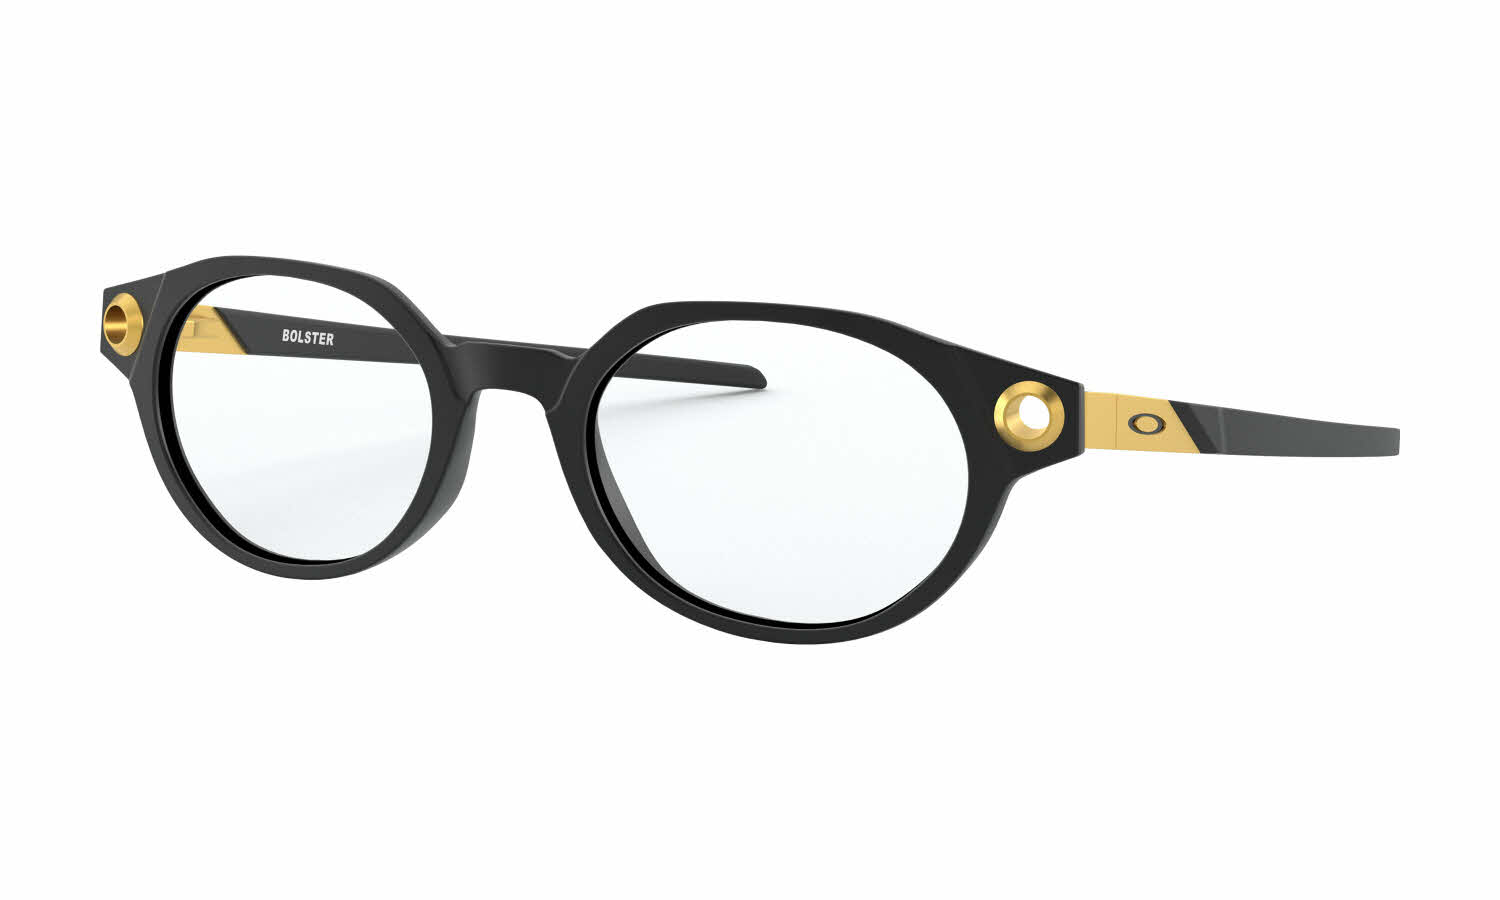 Oakley Bolster - Ahyris Collection Men's Eyeglasses In Black